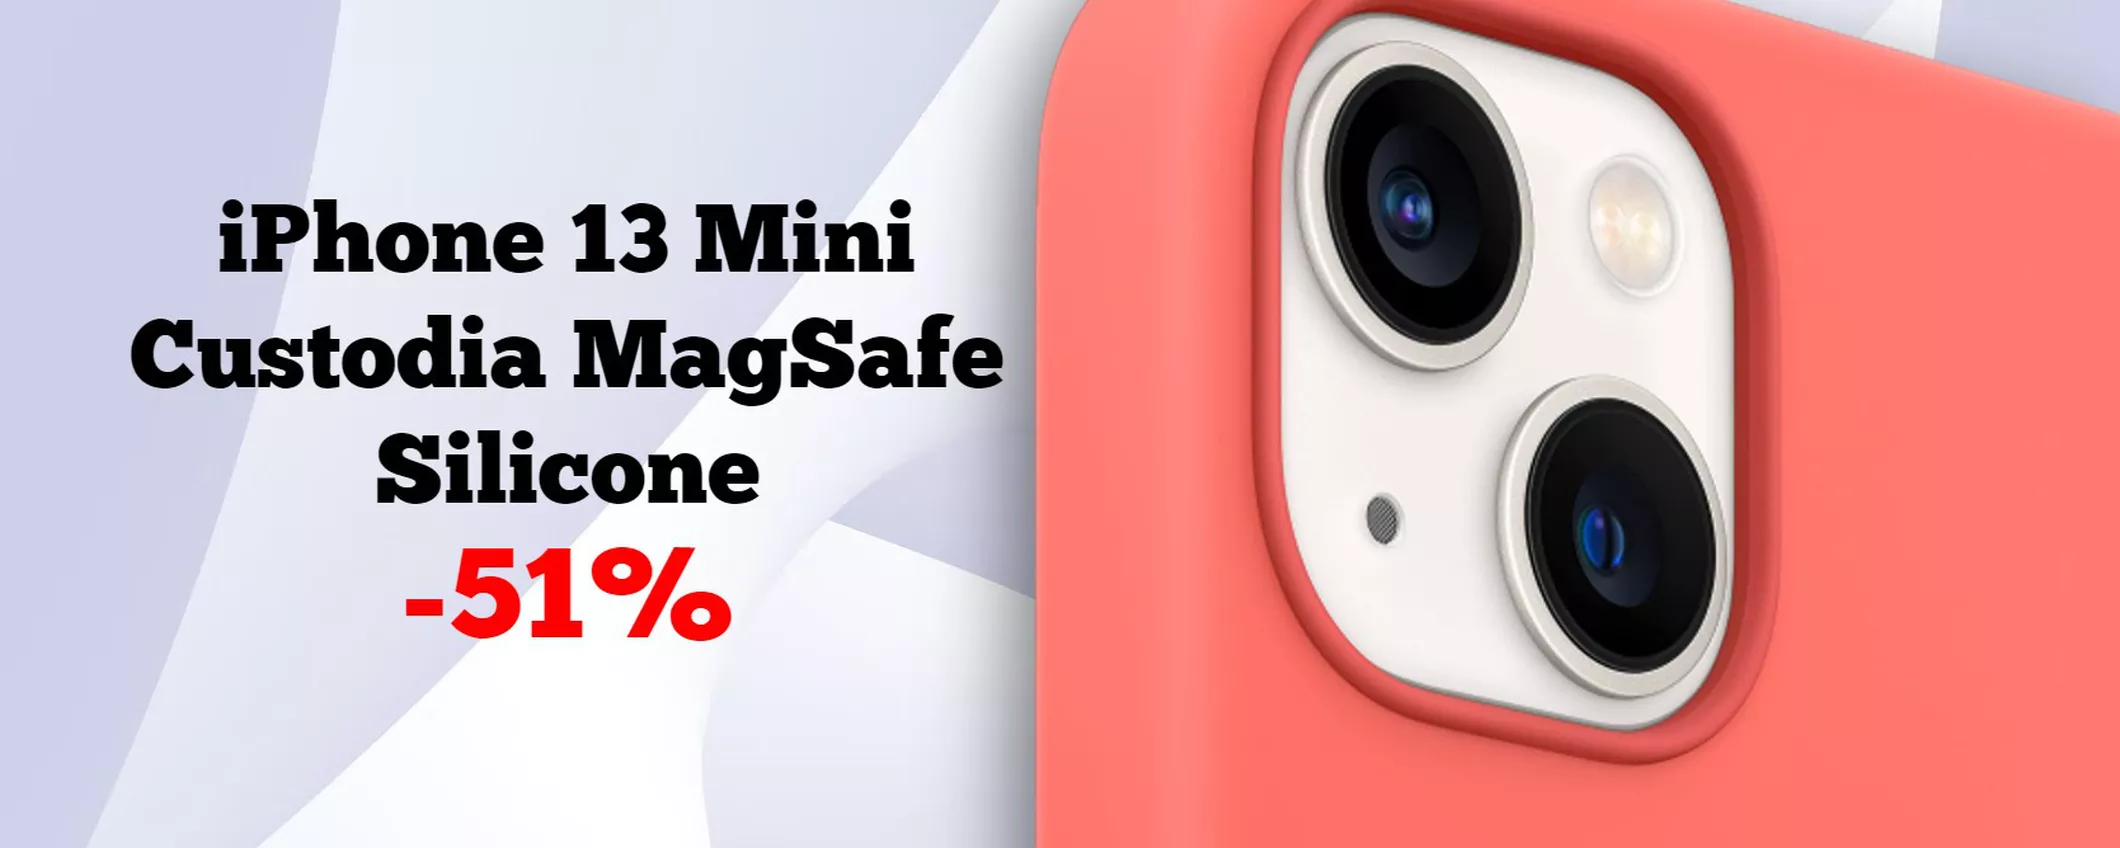 Custodia MagSafe in silicone per iPhone 13 Mini: PROMO BOMBA -51%